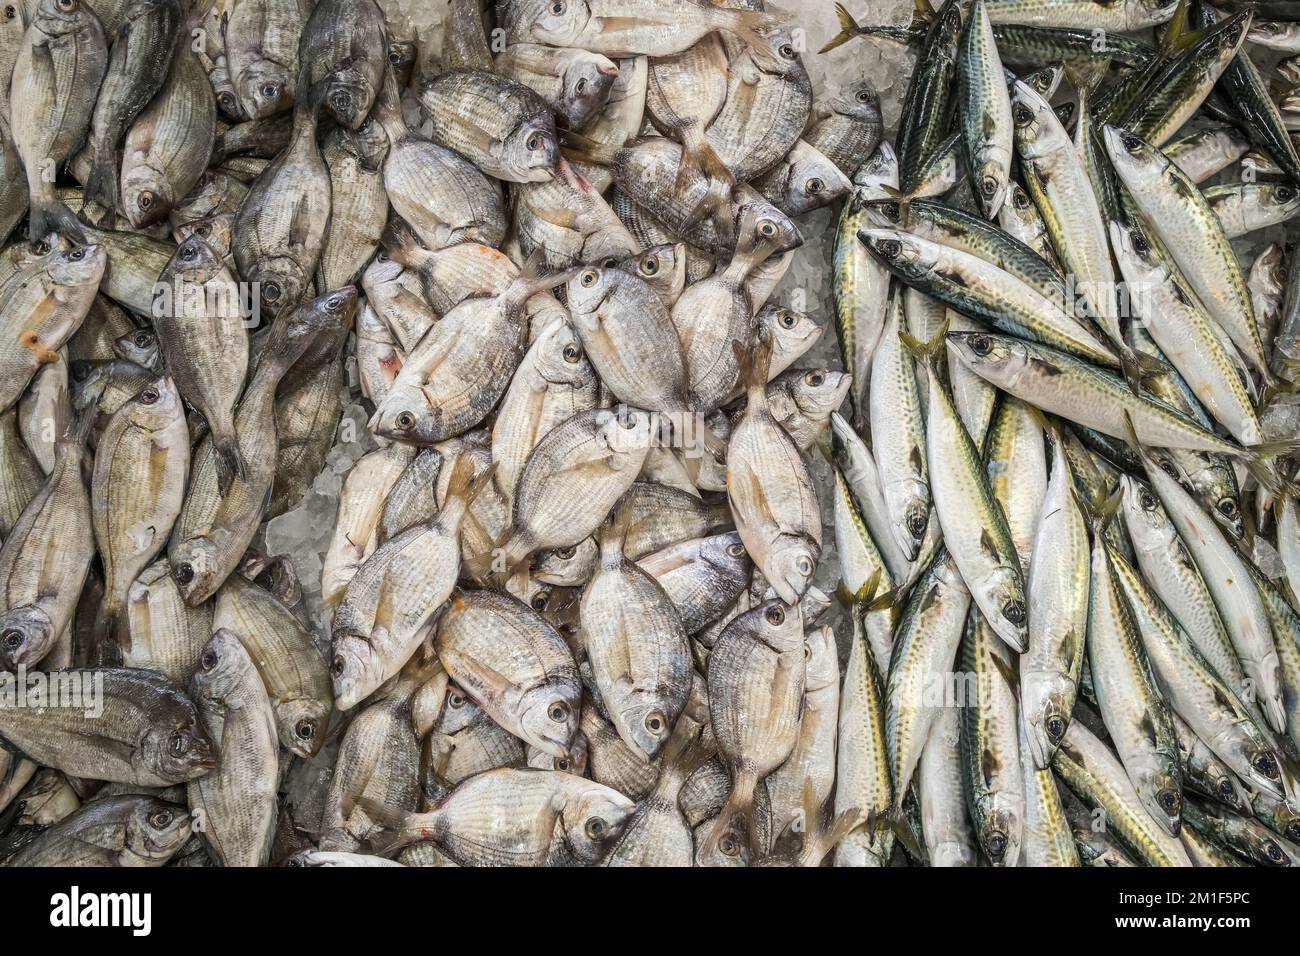 Raw fresh sea fish on a market counter. Stock Photo